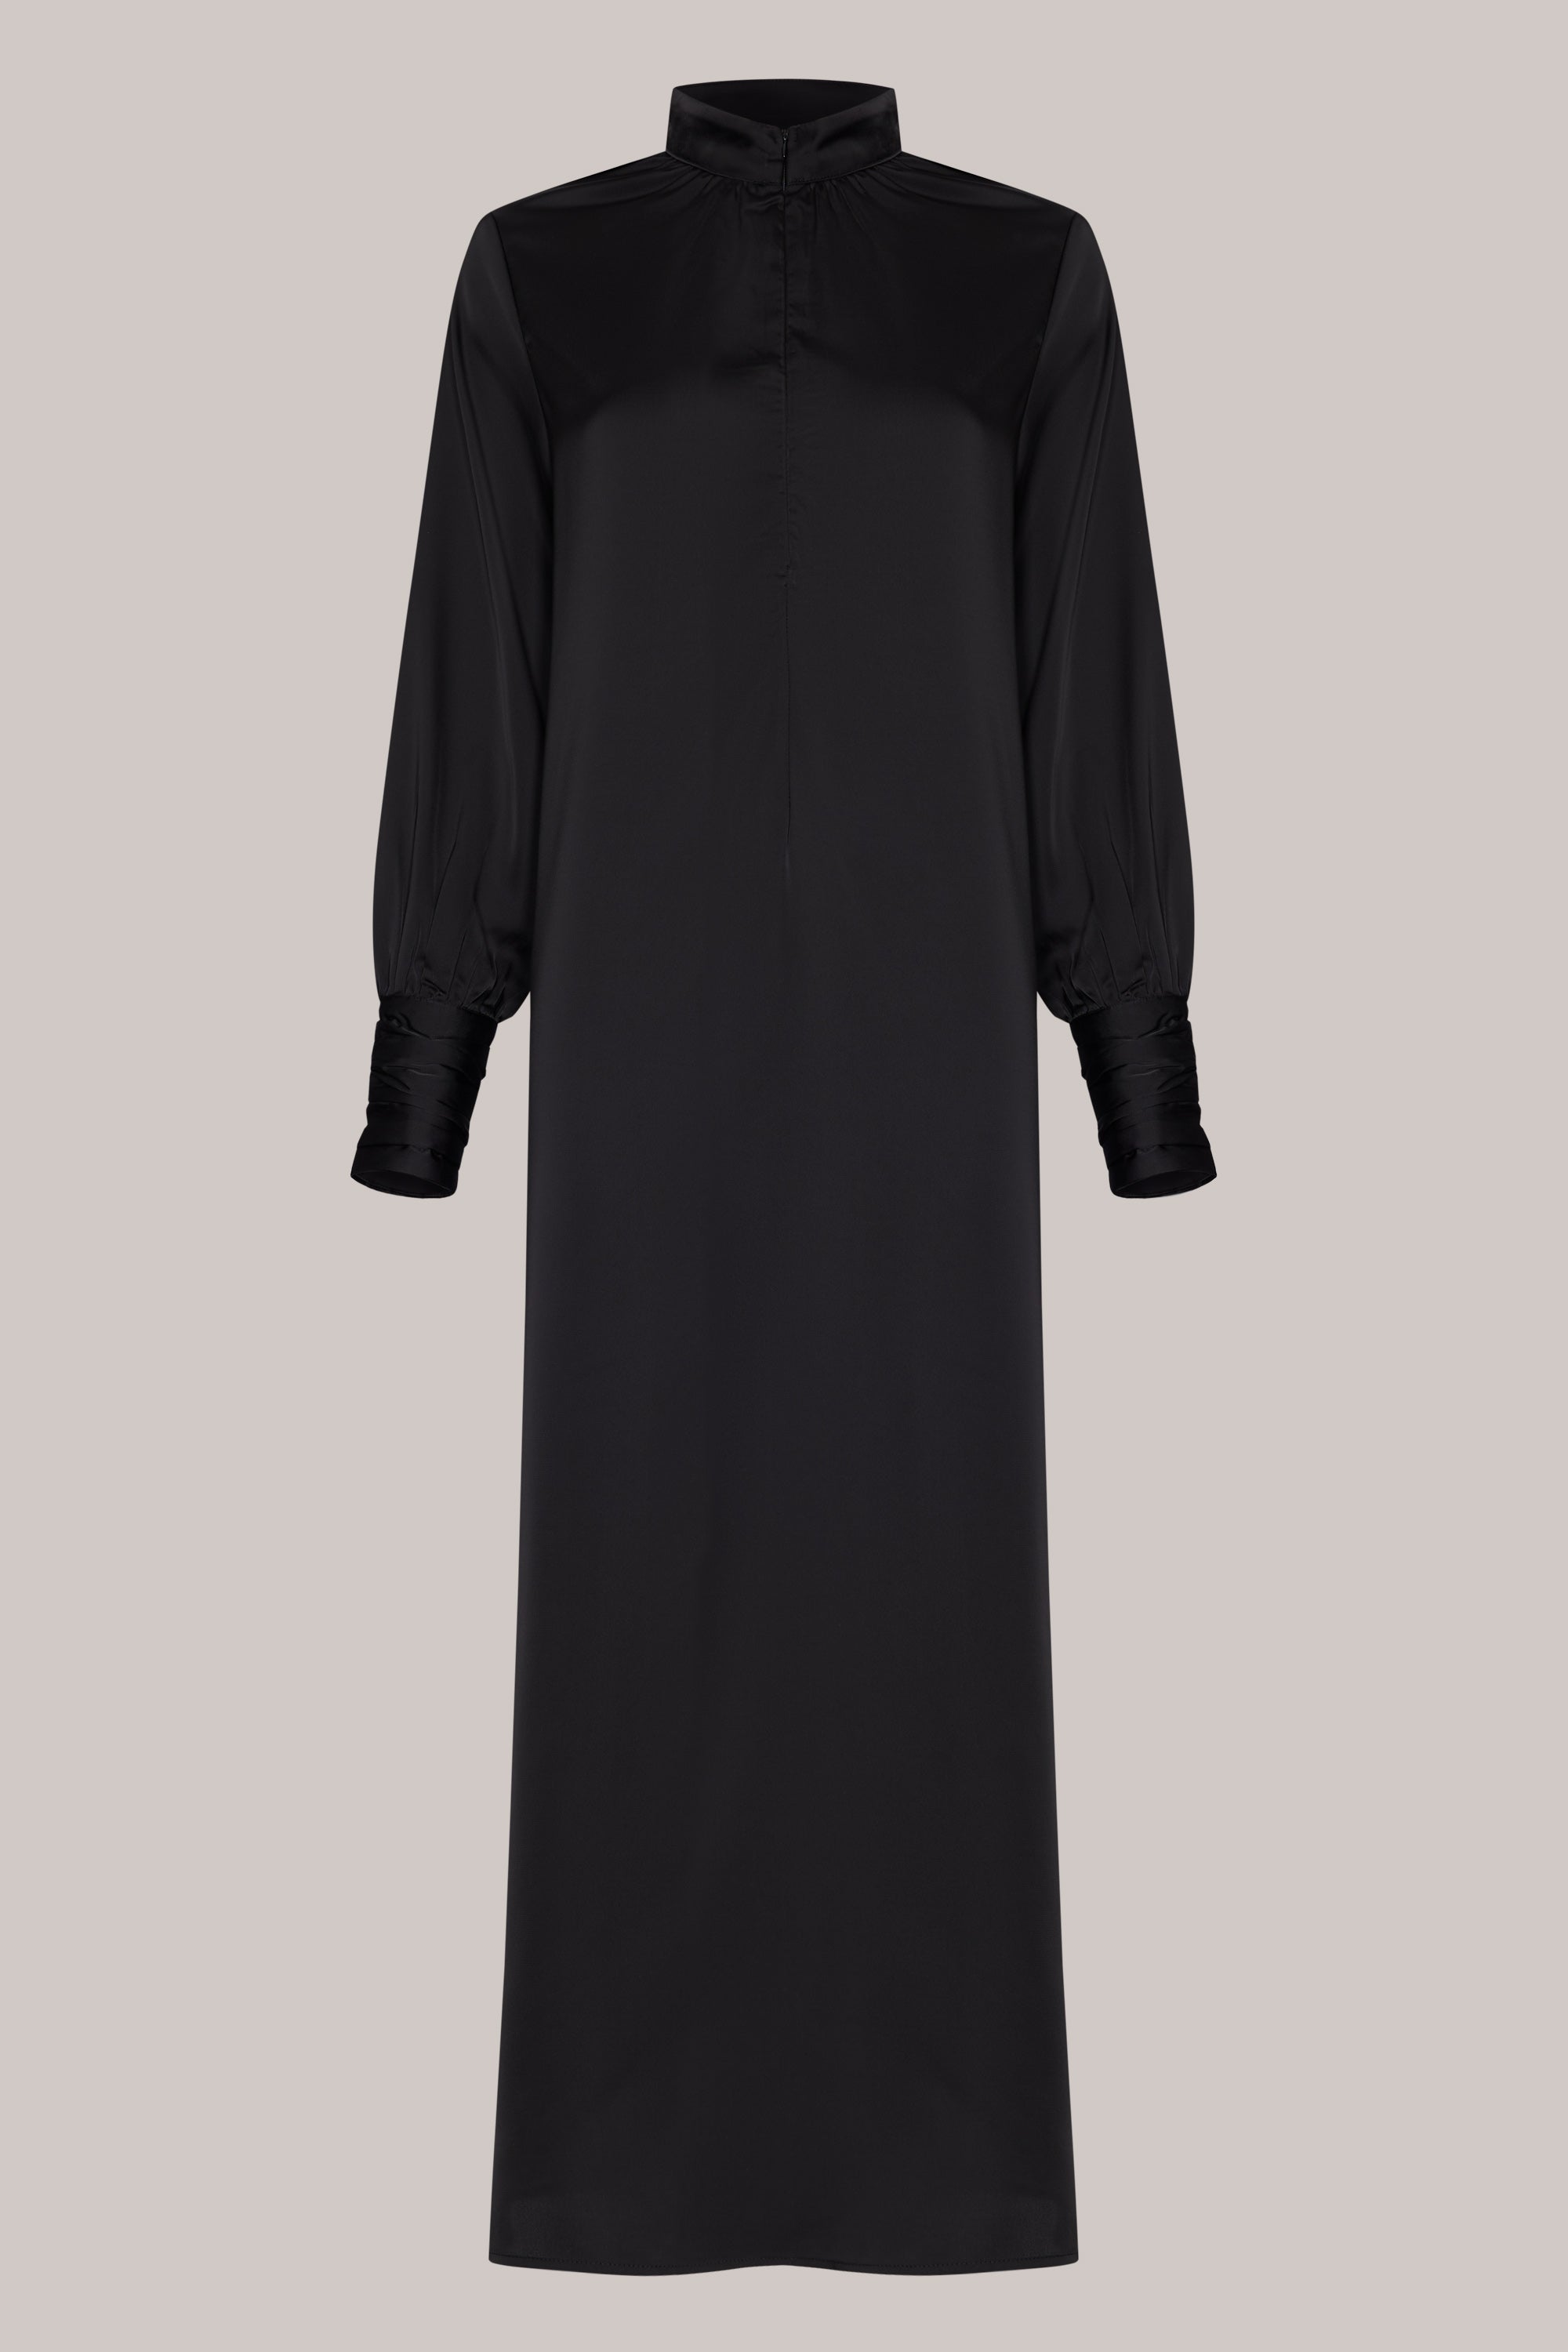 NAKHAL SATIN DRESS - BLACK